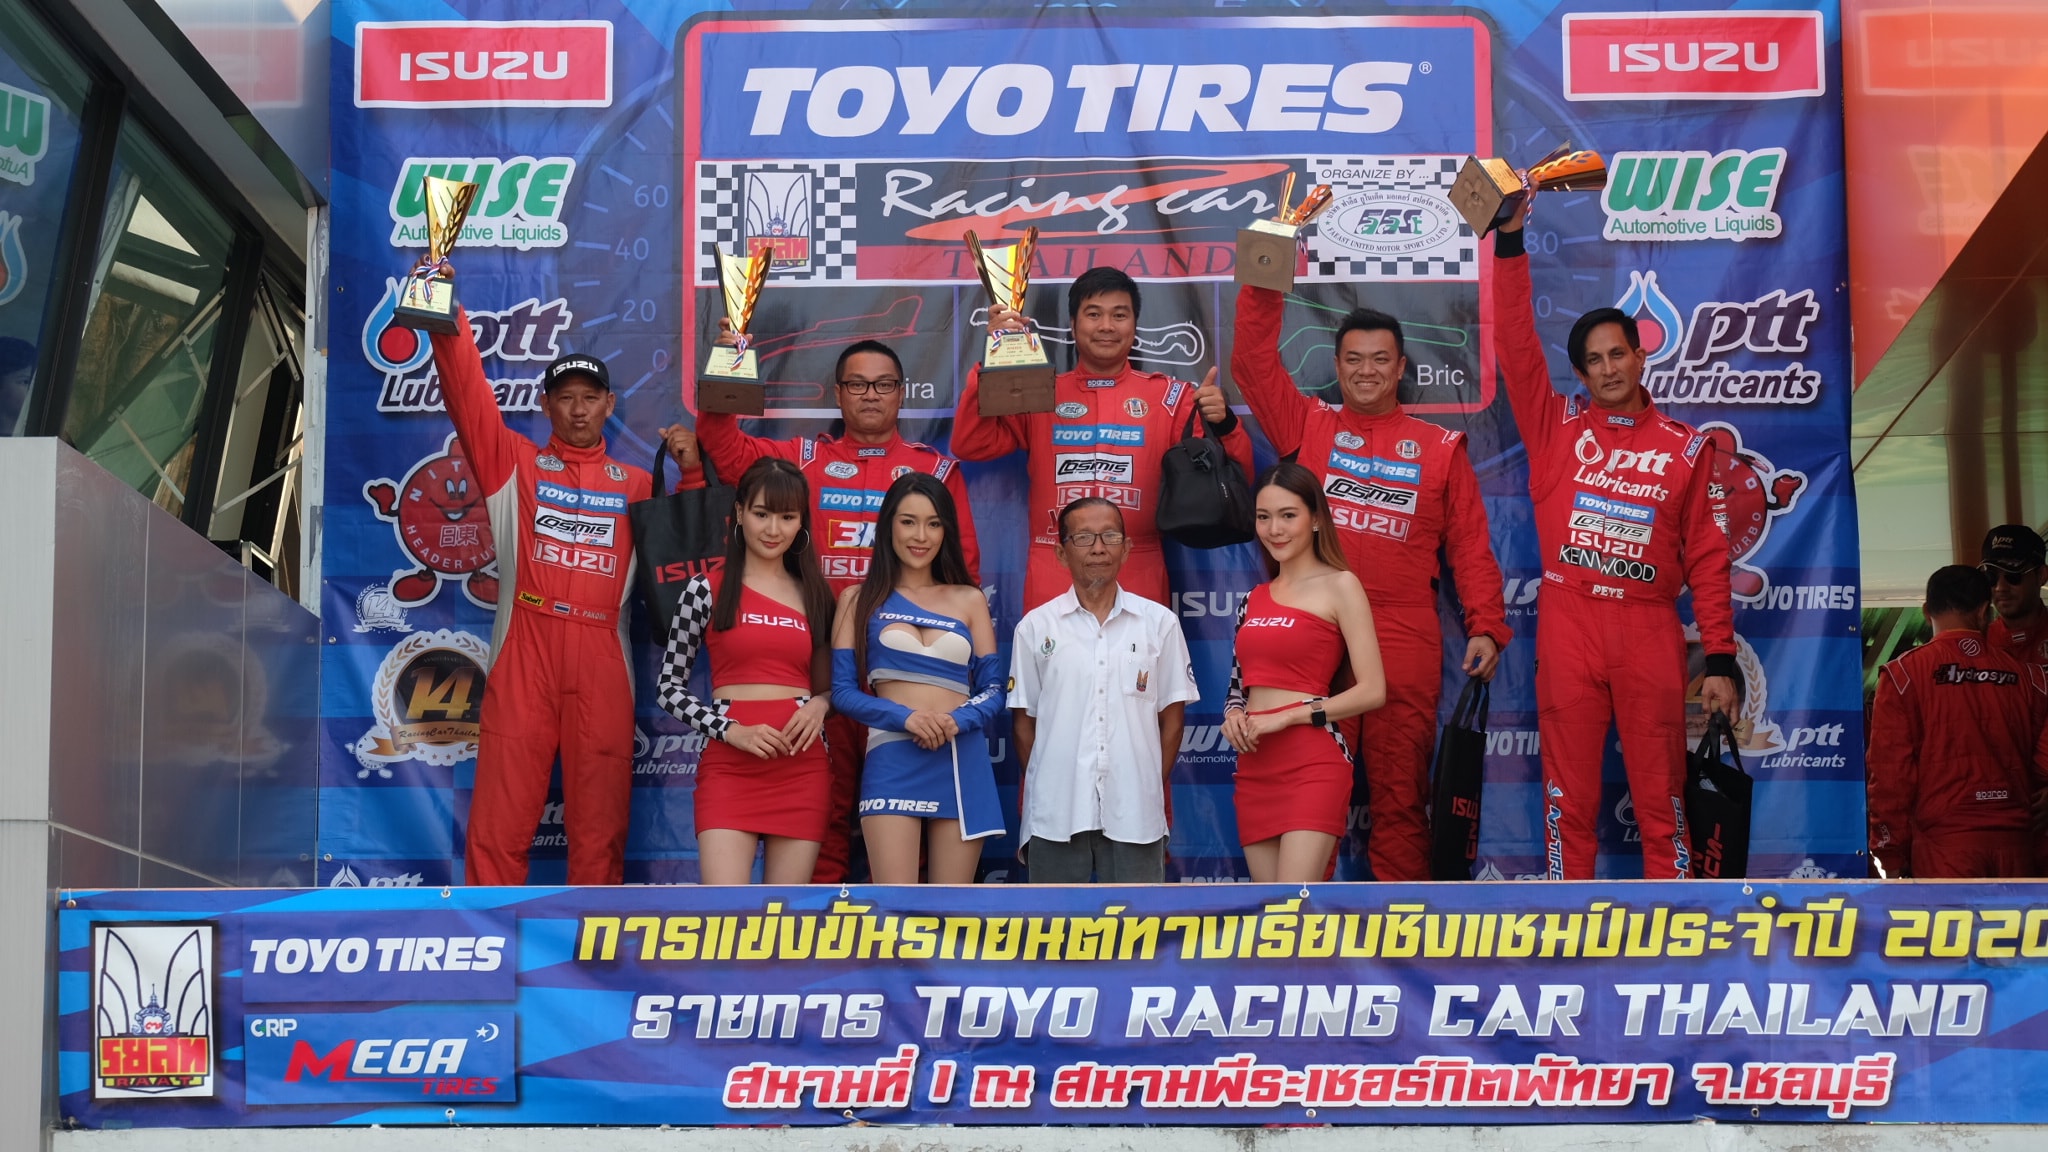 TOYO TIRES RACING CAR THAILAND 2020 สนามที่ 1 ISUZU 1 MAKE RACE ดันกันสุดราง